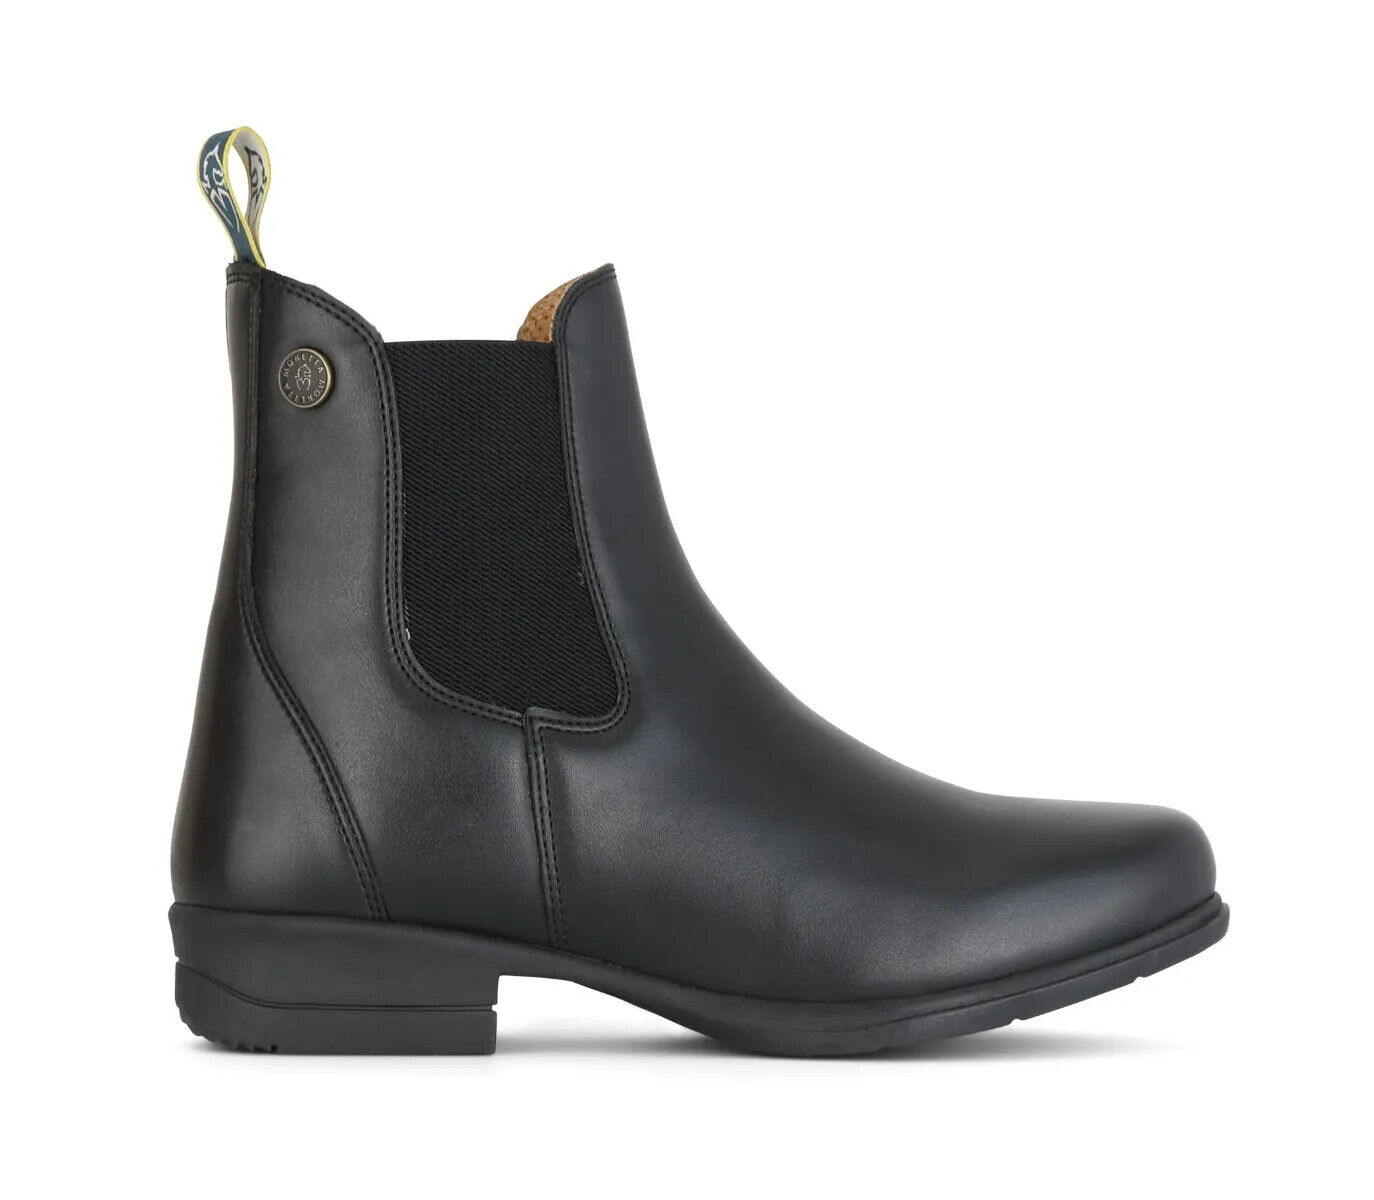 Shires Moretta Alma Adults Jodhpur Boots | Black/Brown | UK Size 4 - 11